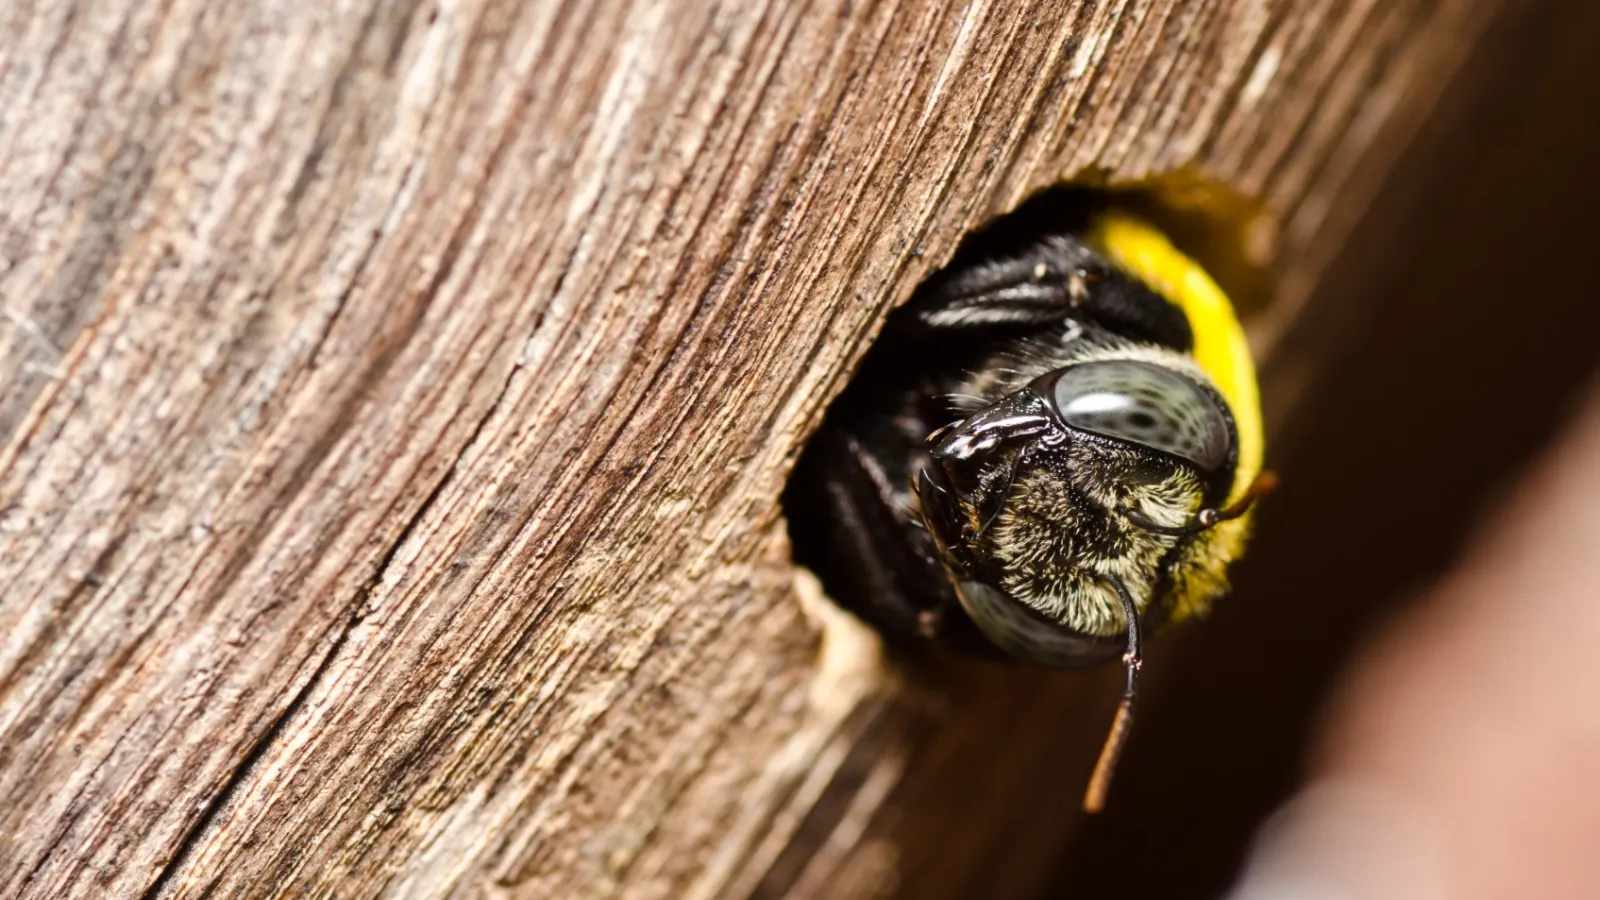 a close up of a carpenter bee